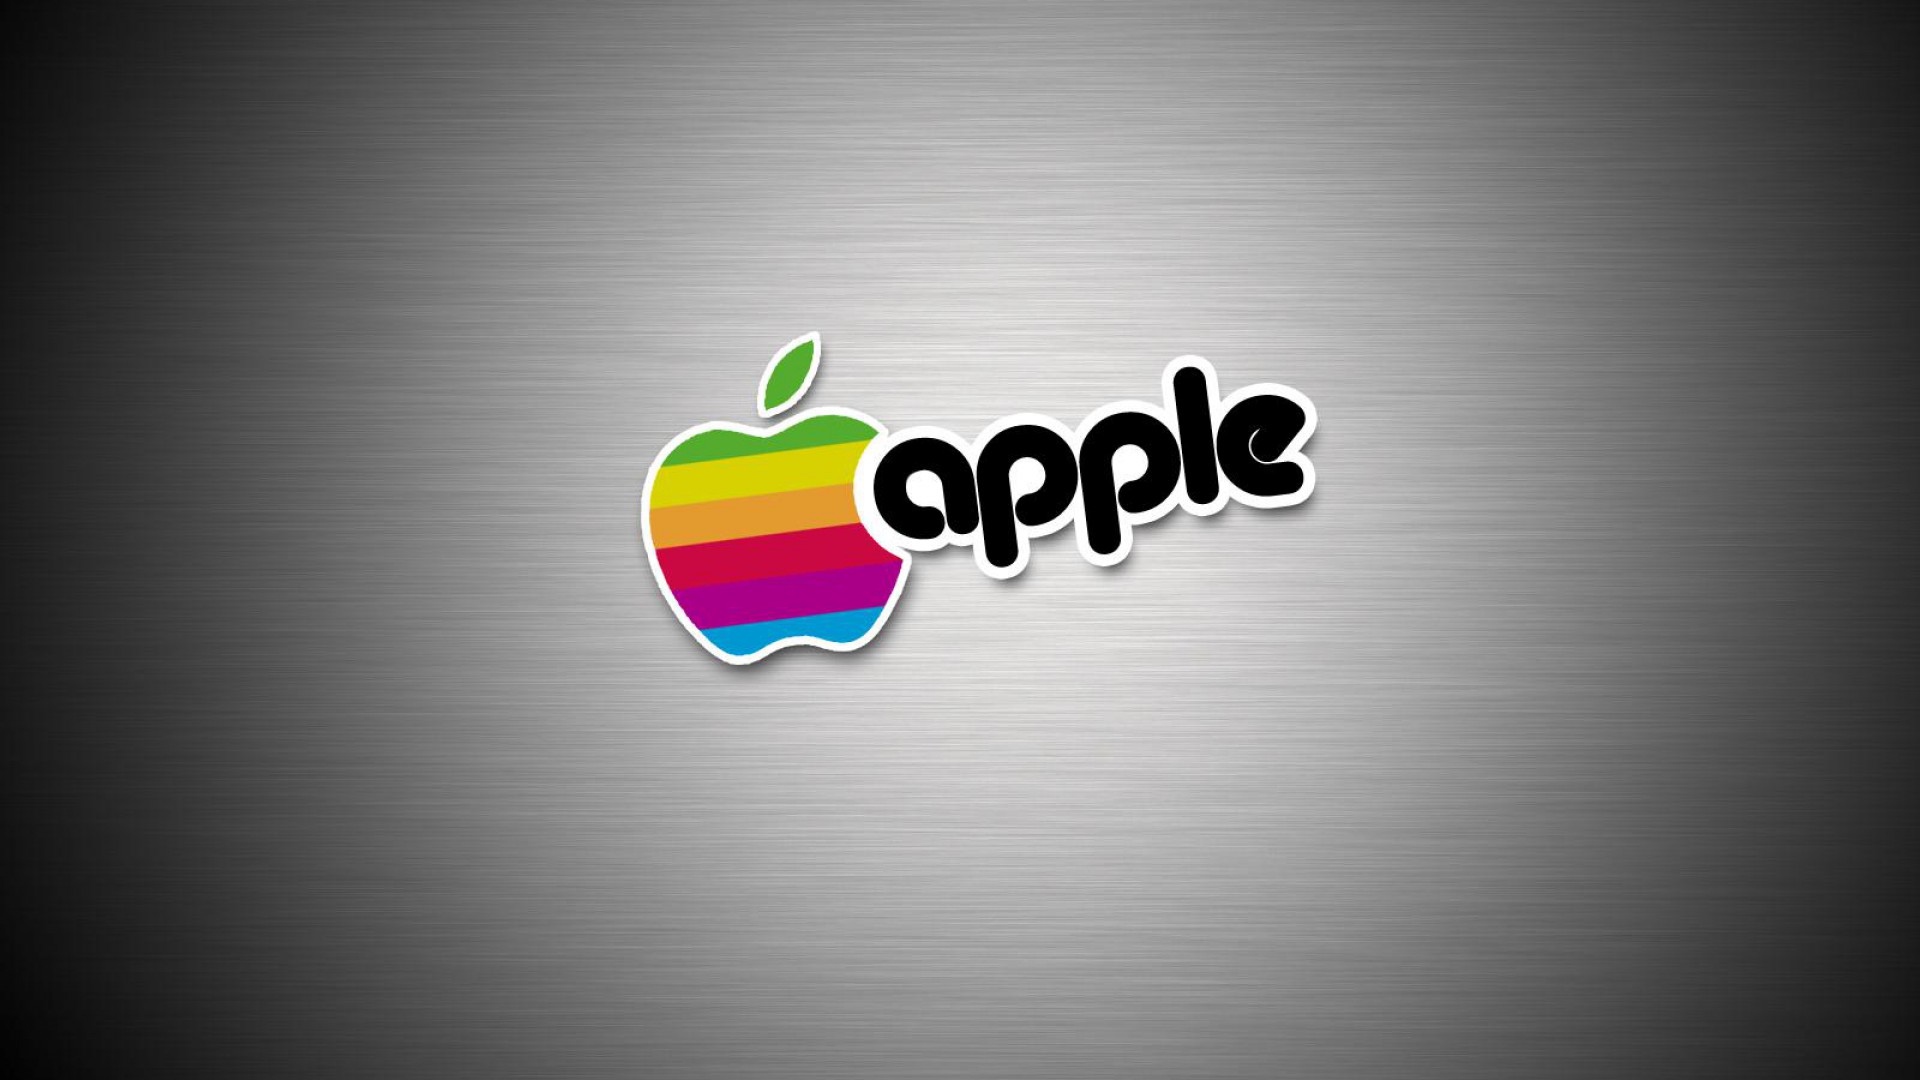 Apple Logo Wallpapers HD rainbow text